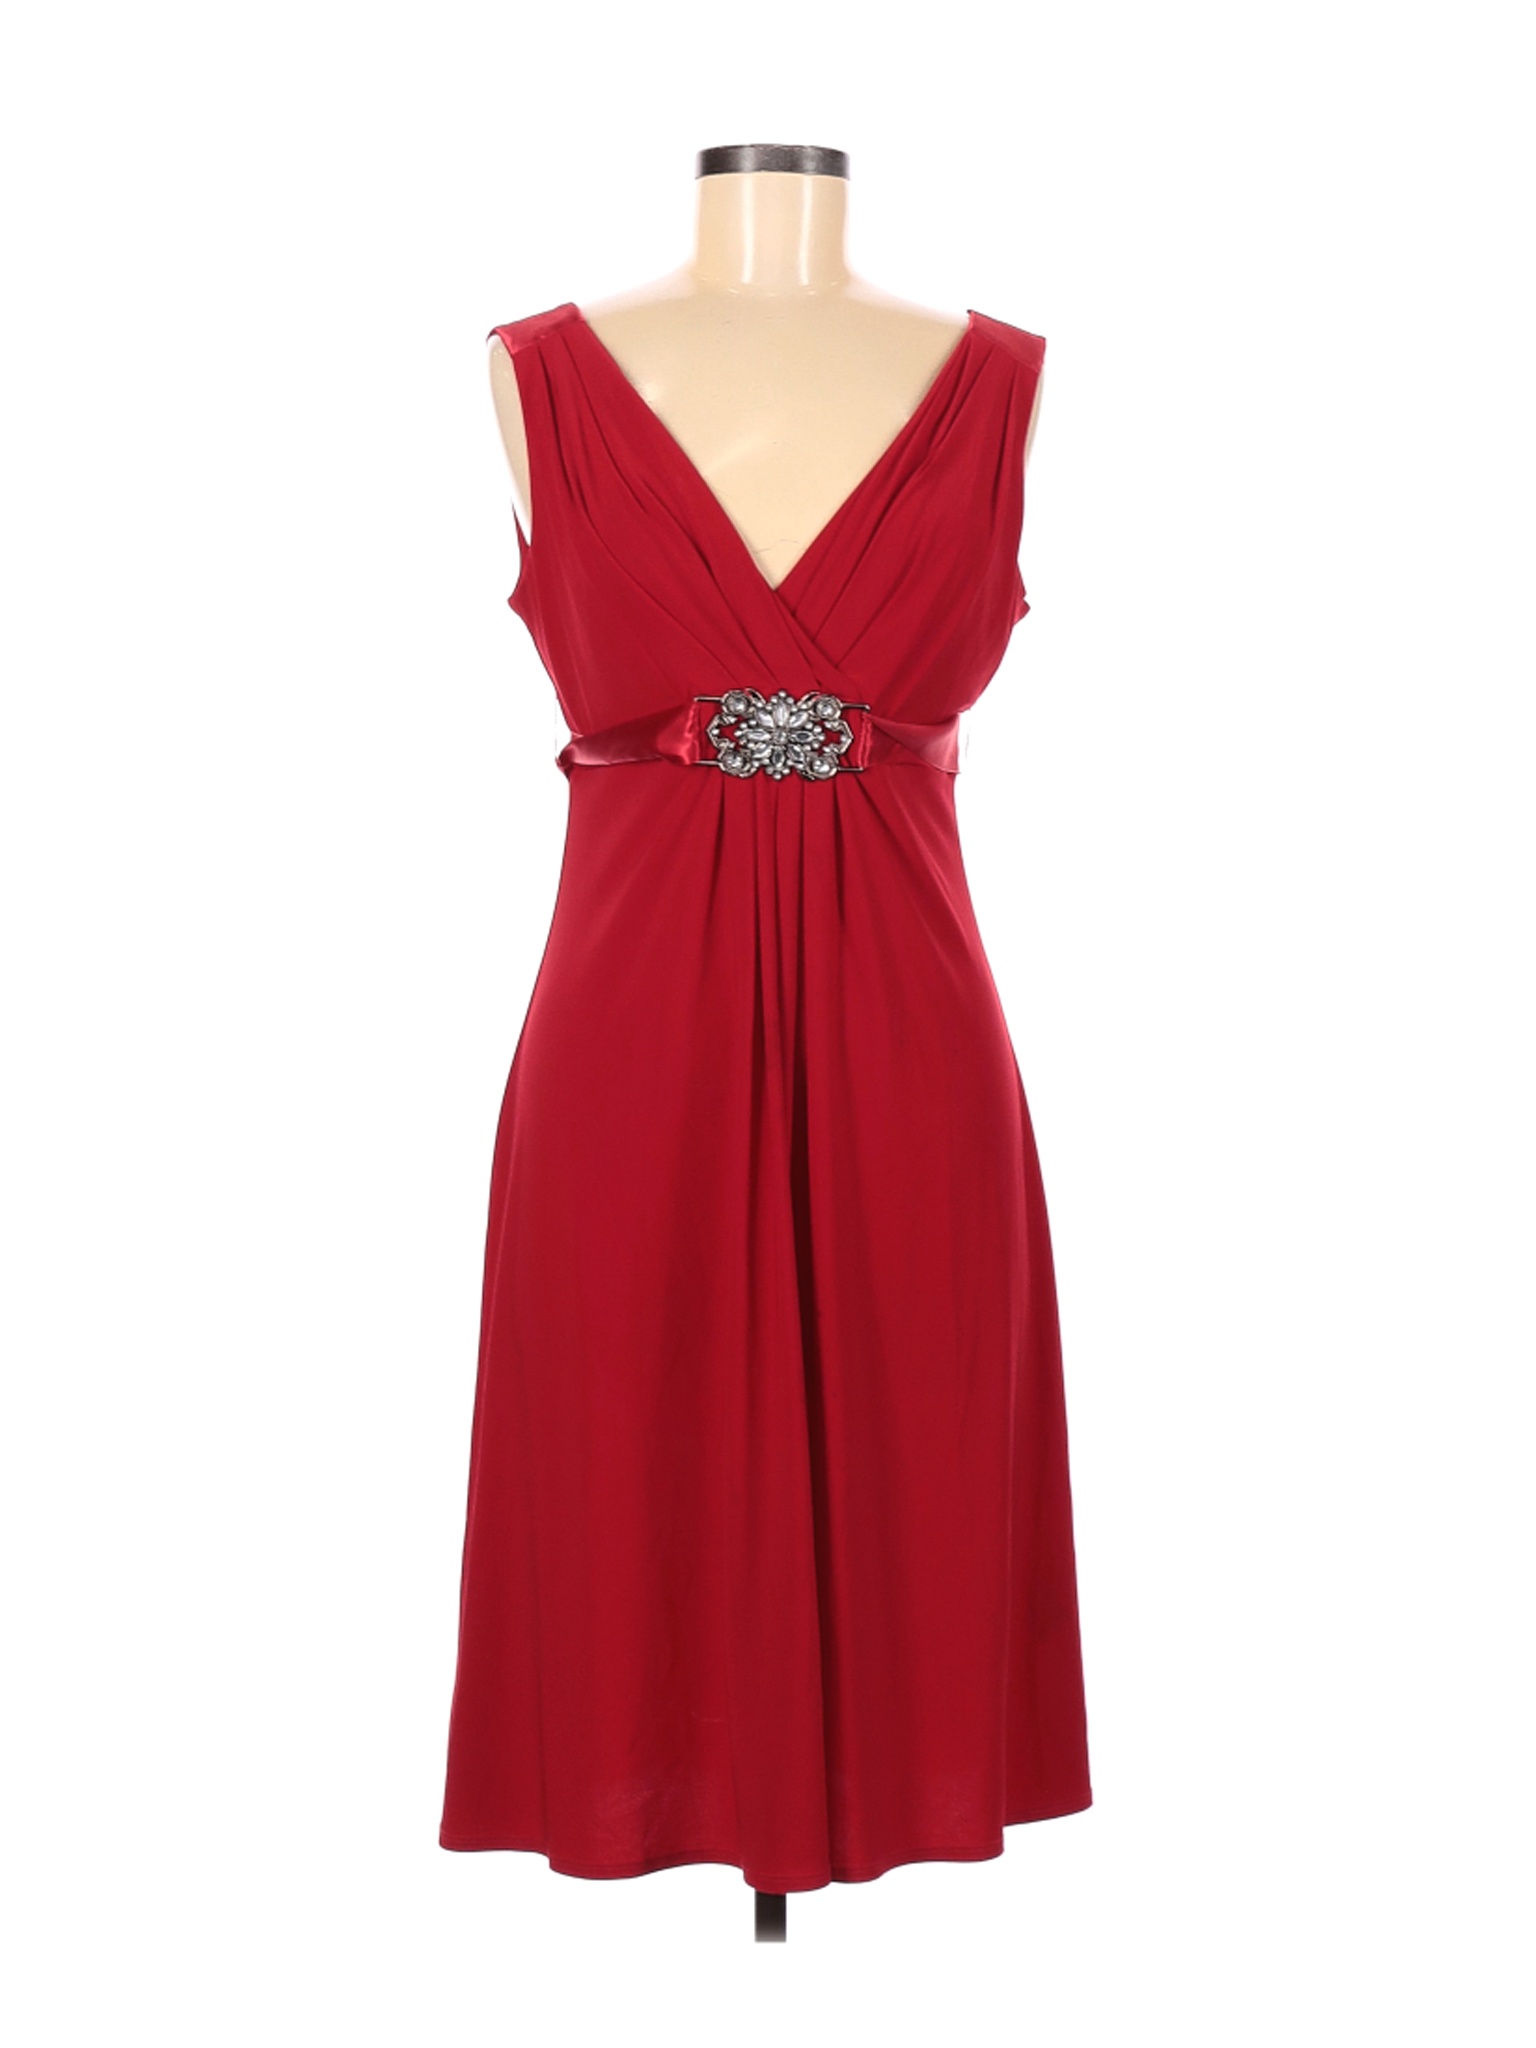 Scarlet Women Red Cocktail Dress 8 | eBay